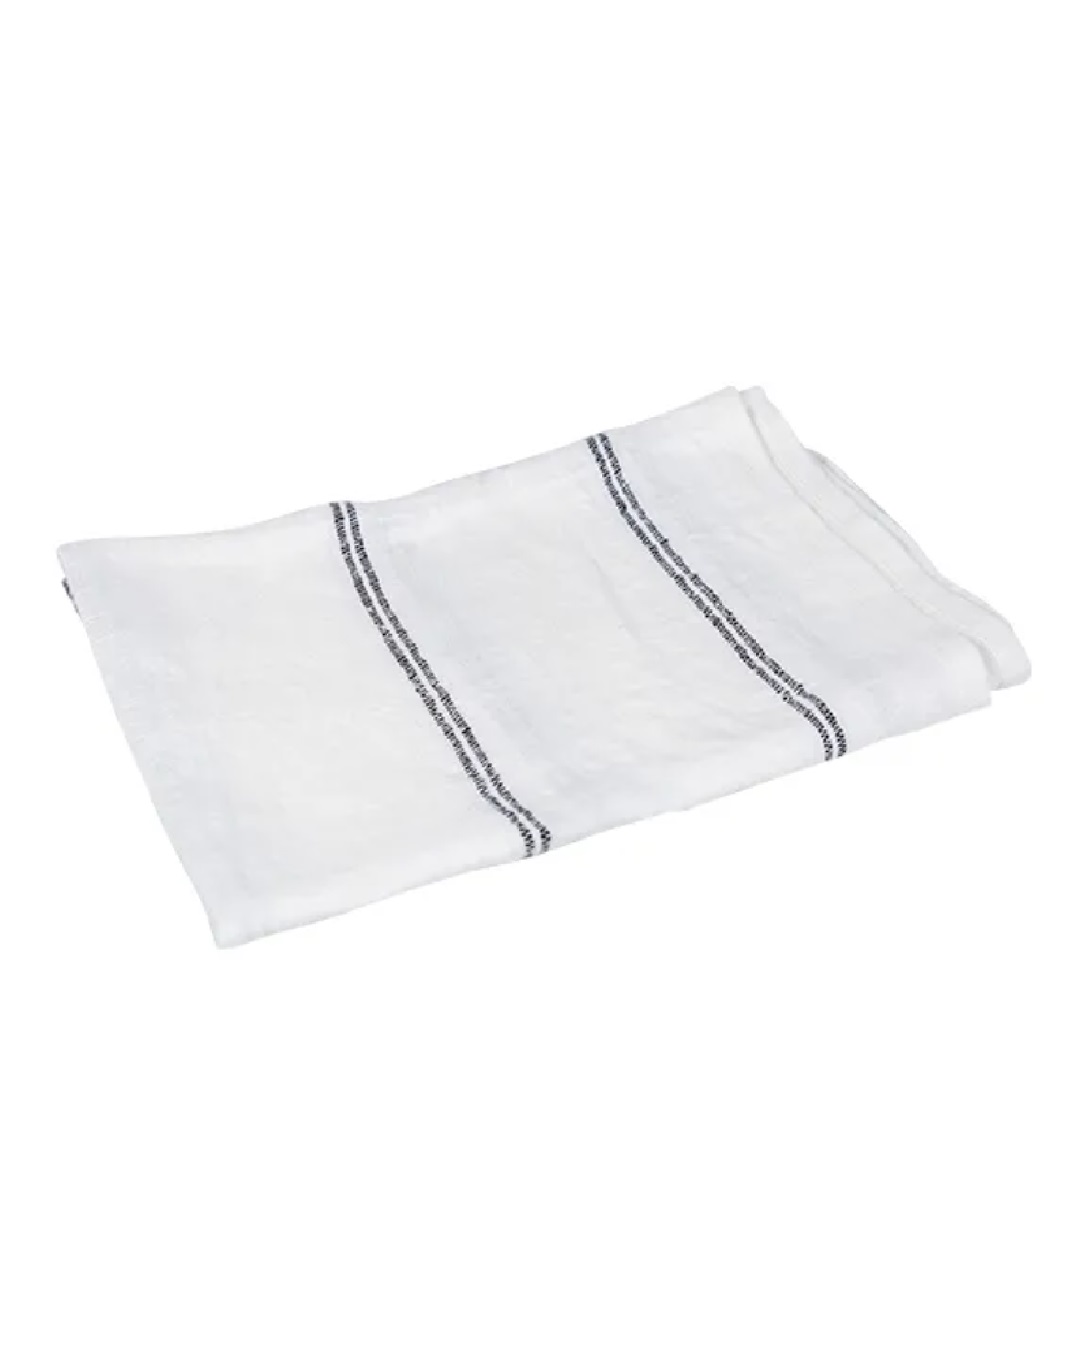 Woven stripe tea towel off white and black